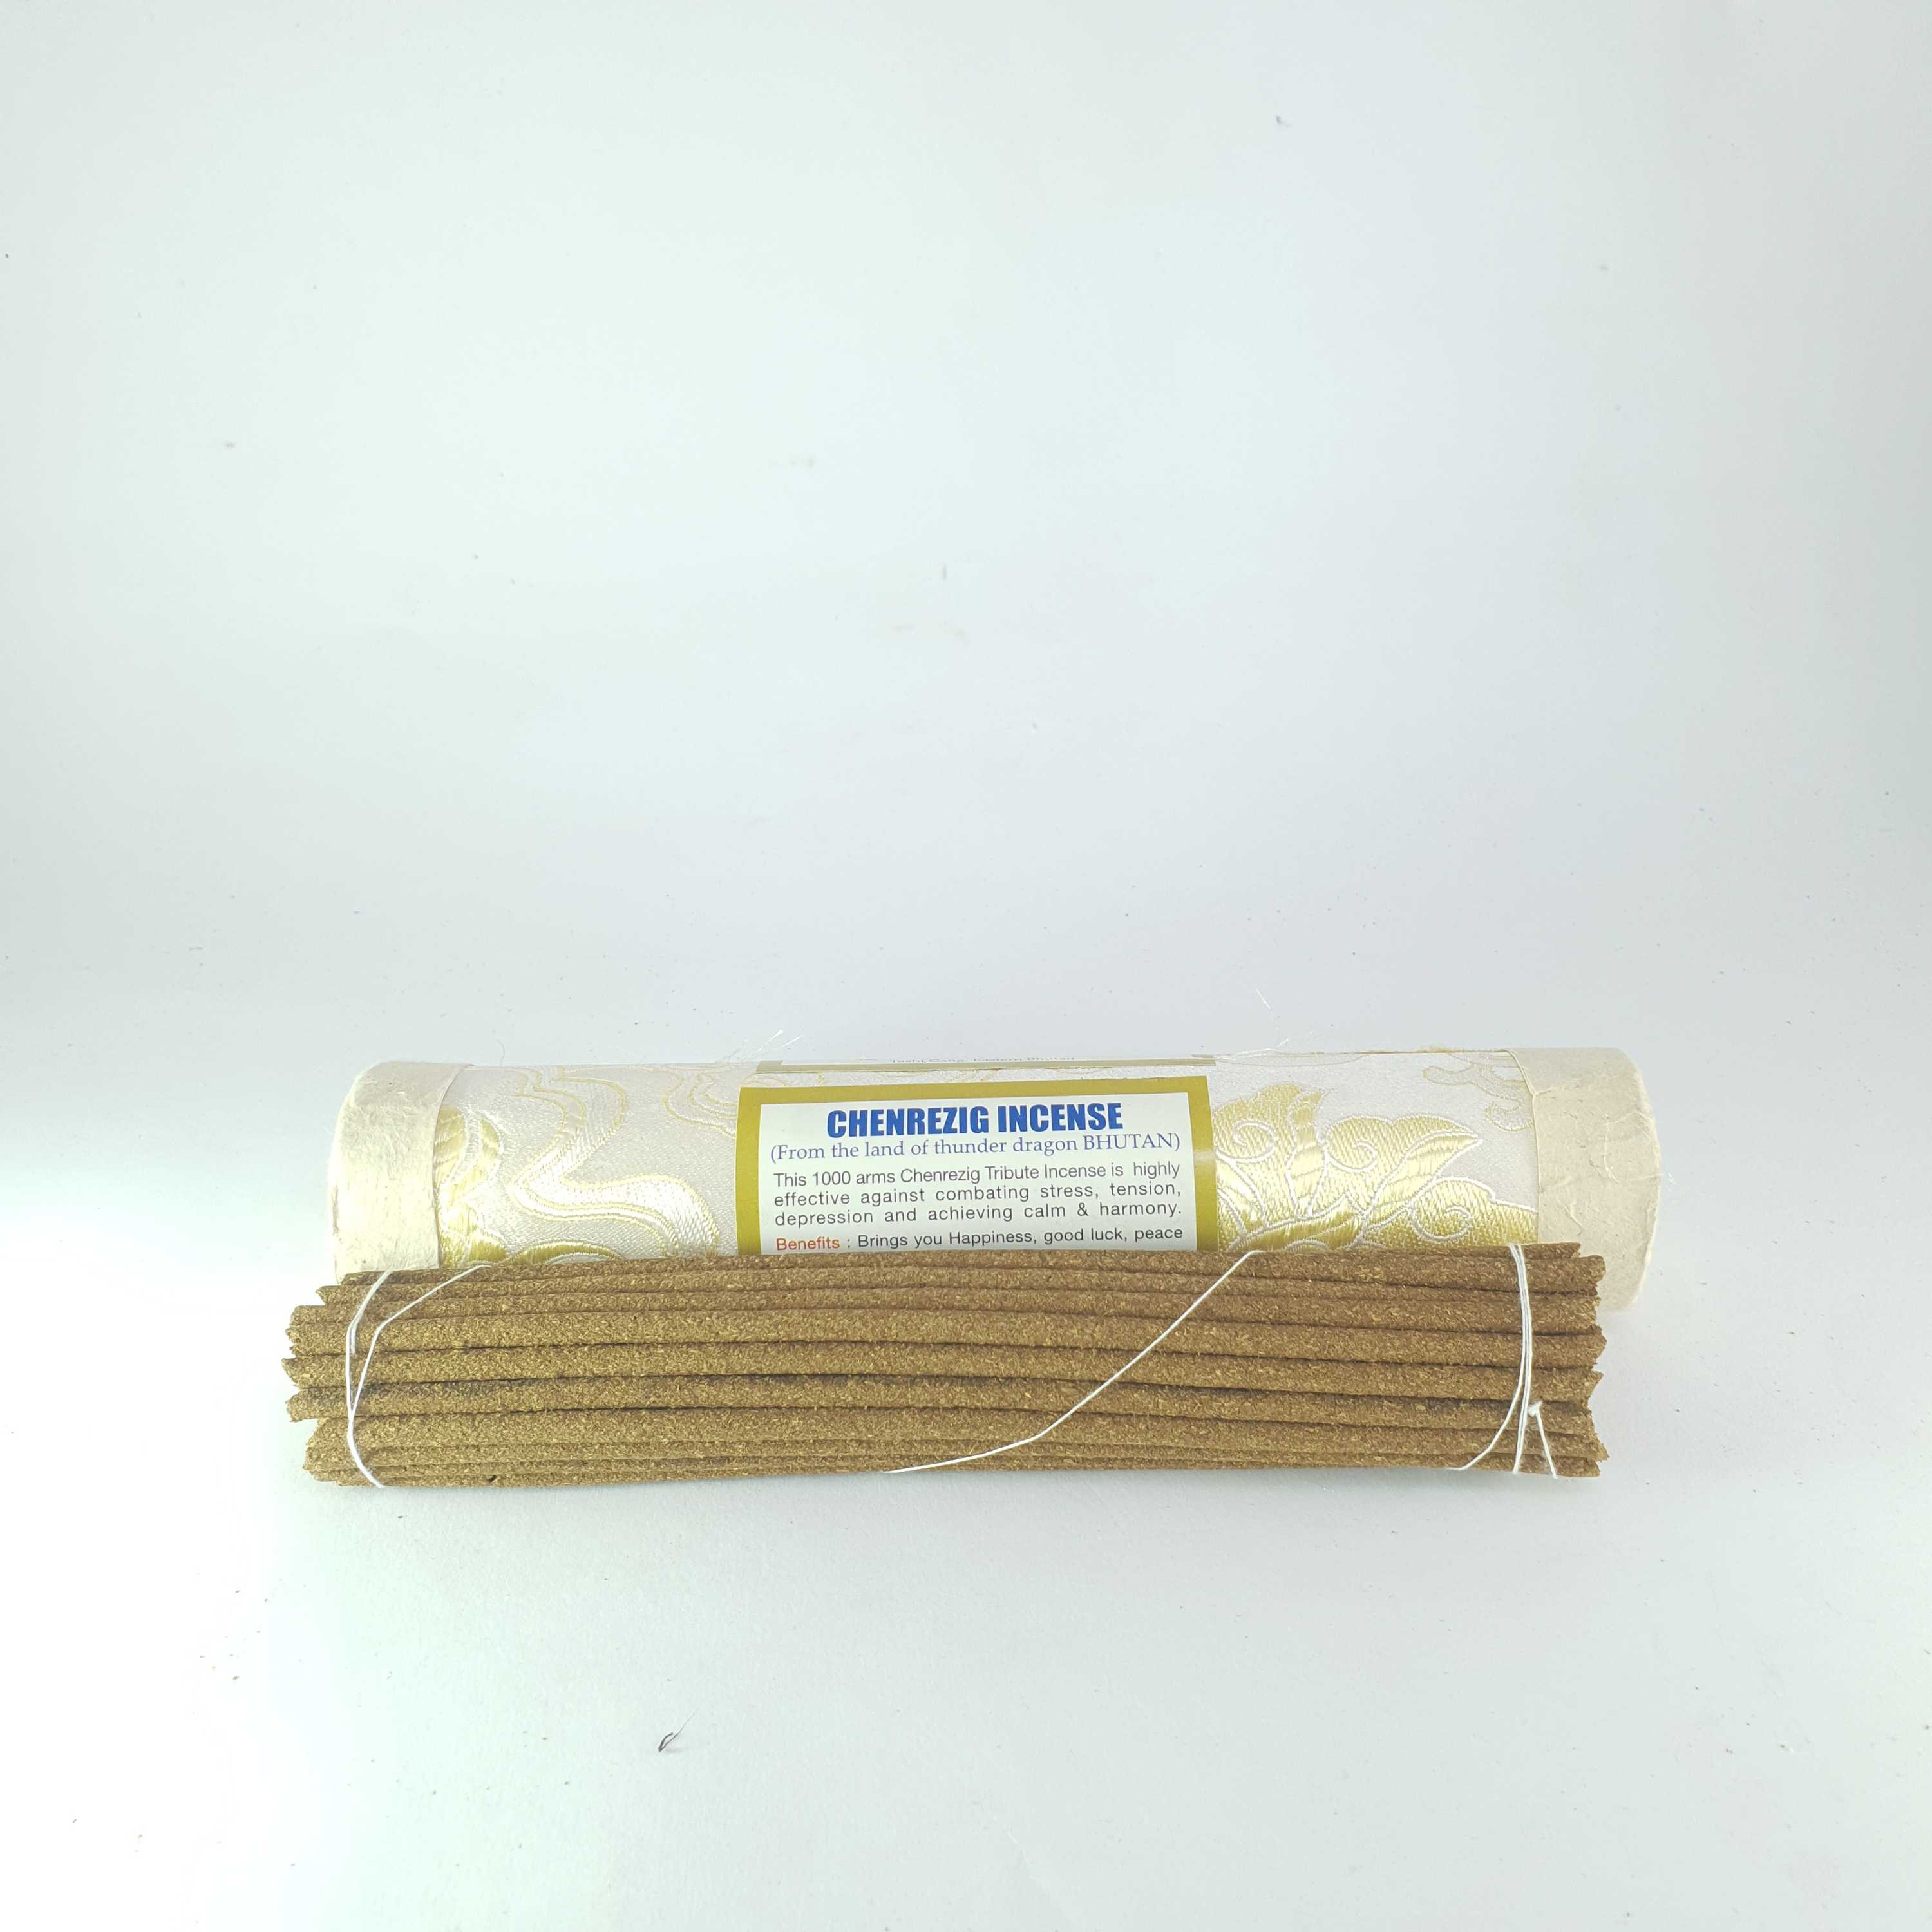 Chenrezig Buddhist Herbal Incense tube